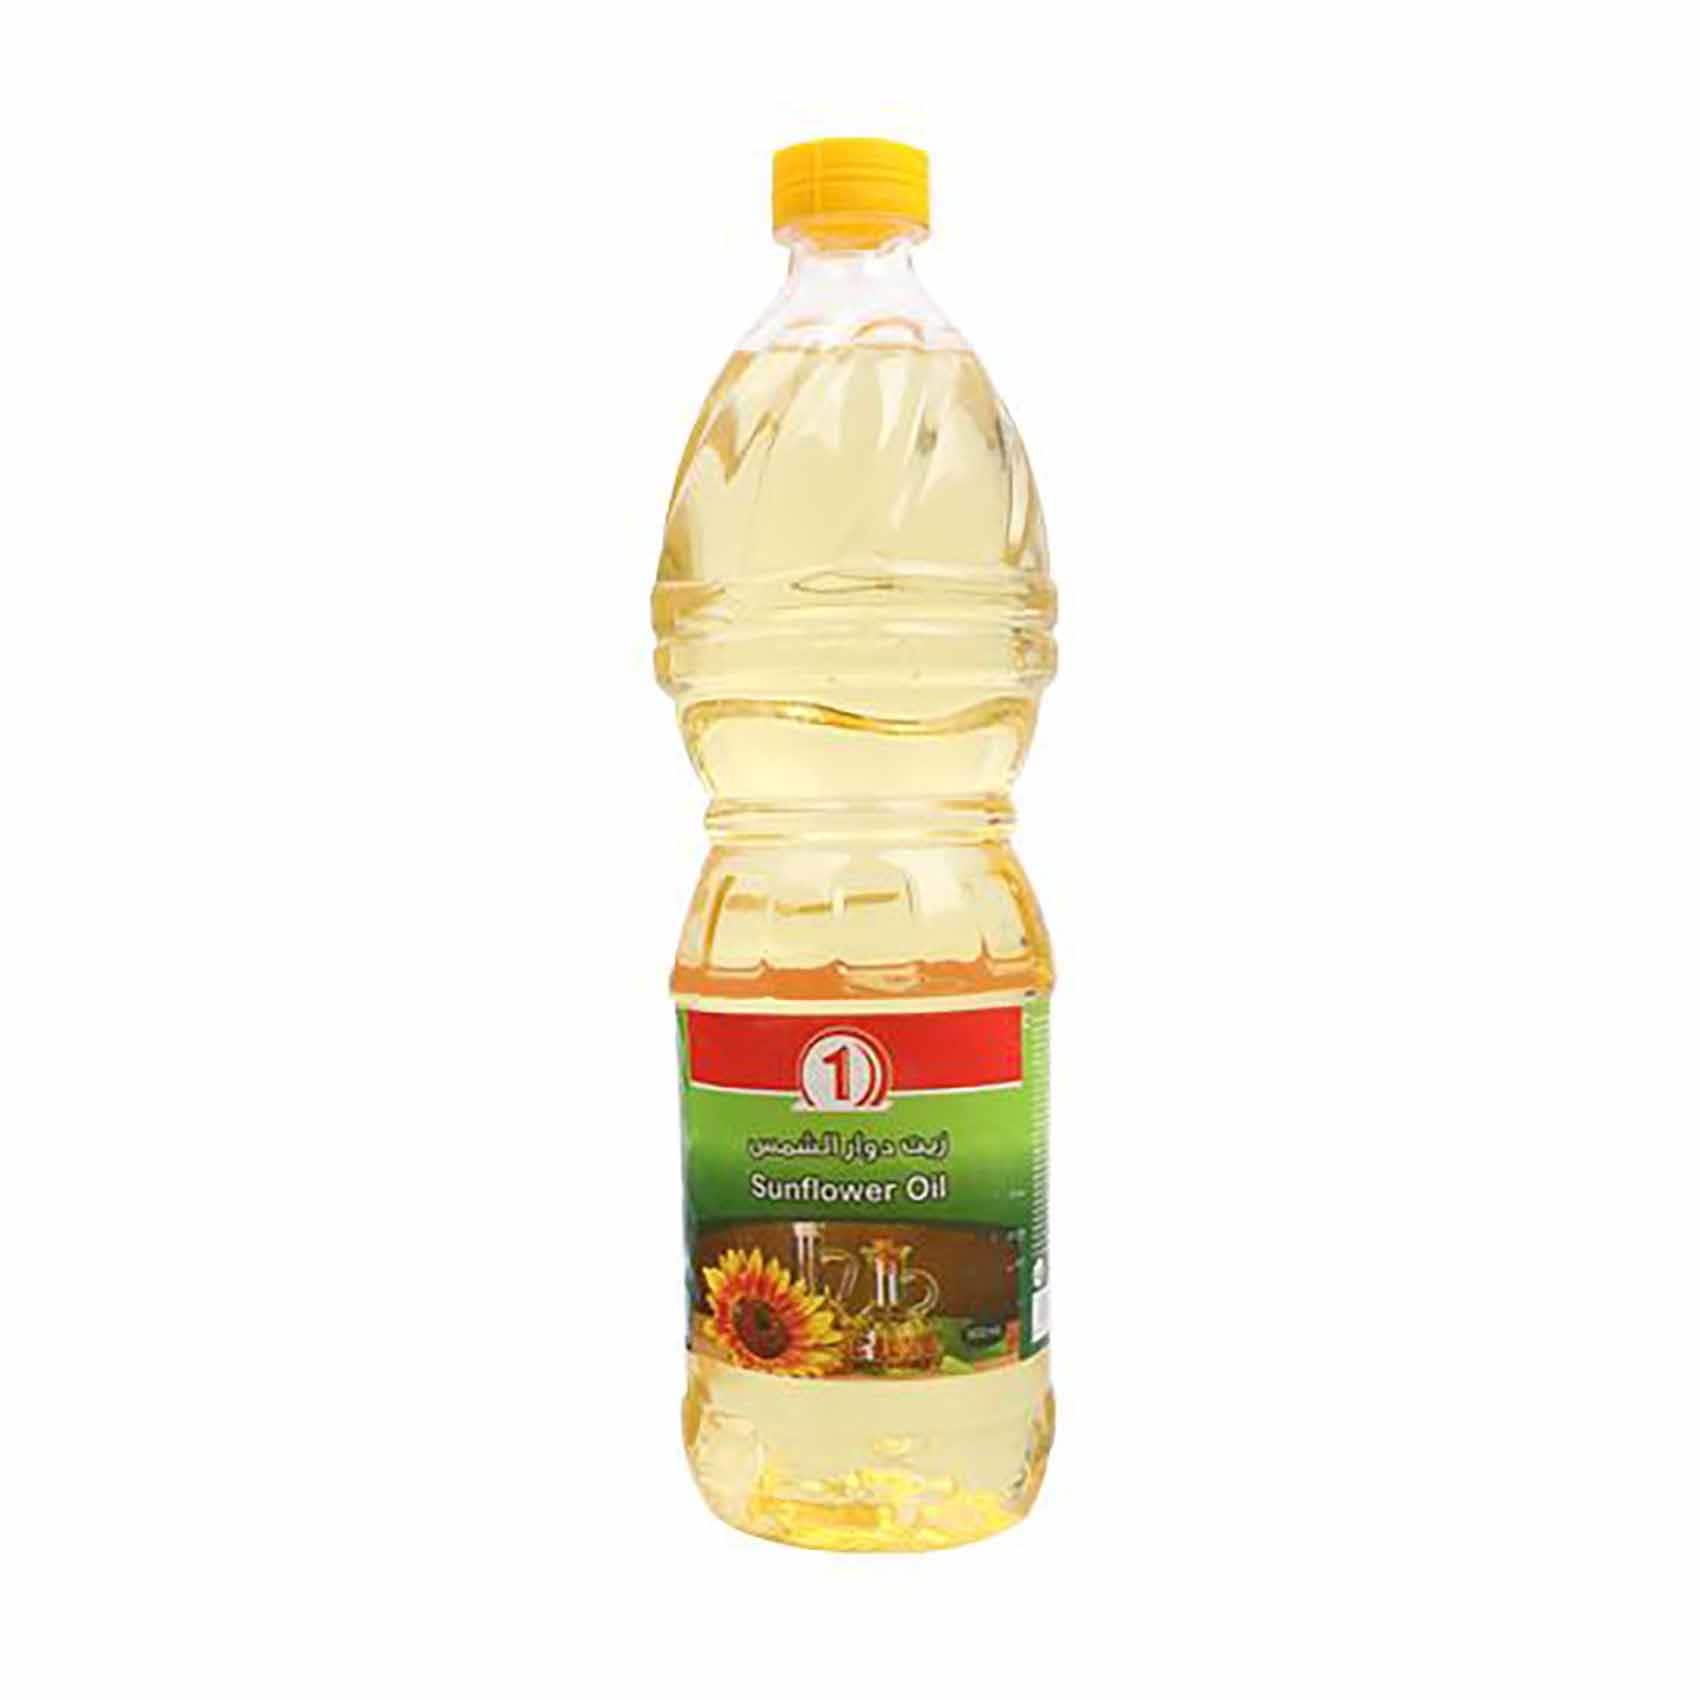 Buy N1 Sunflower Oil - 900ml Online - Shop Food Cupboard on Carrefour Egypt